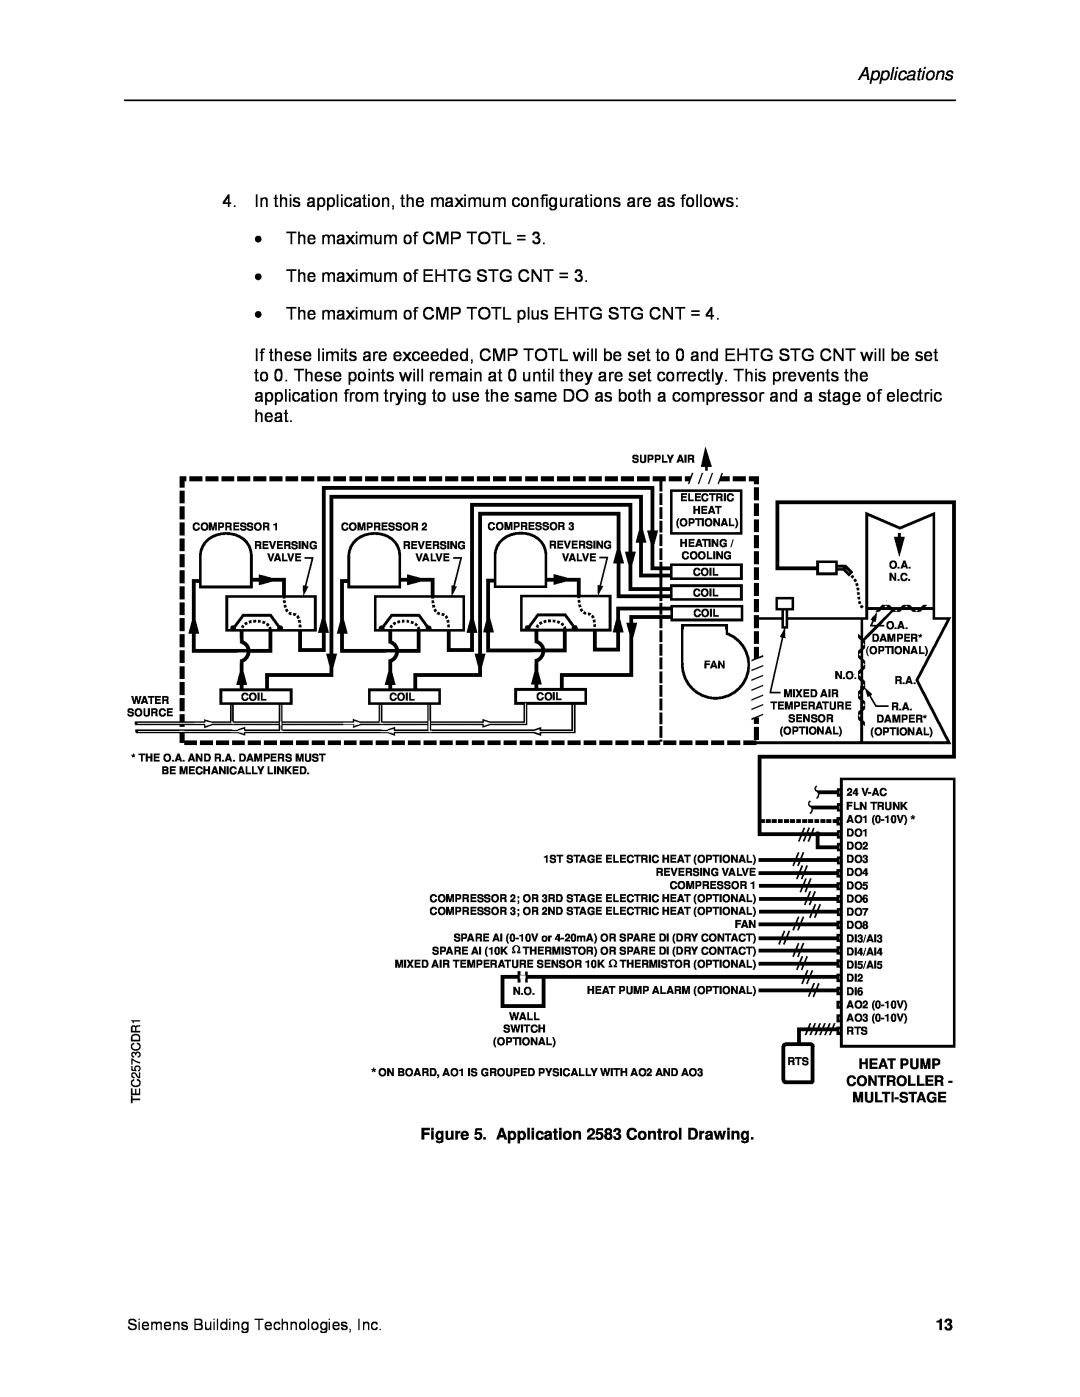 Siemens 125-699 owner manual Applications, The maximum of CMP TOTL = 